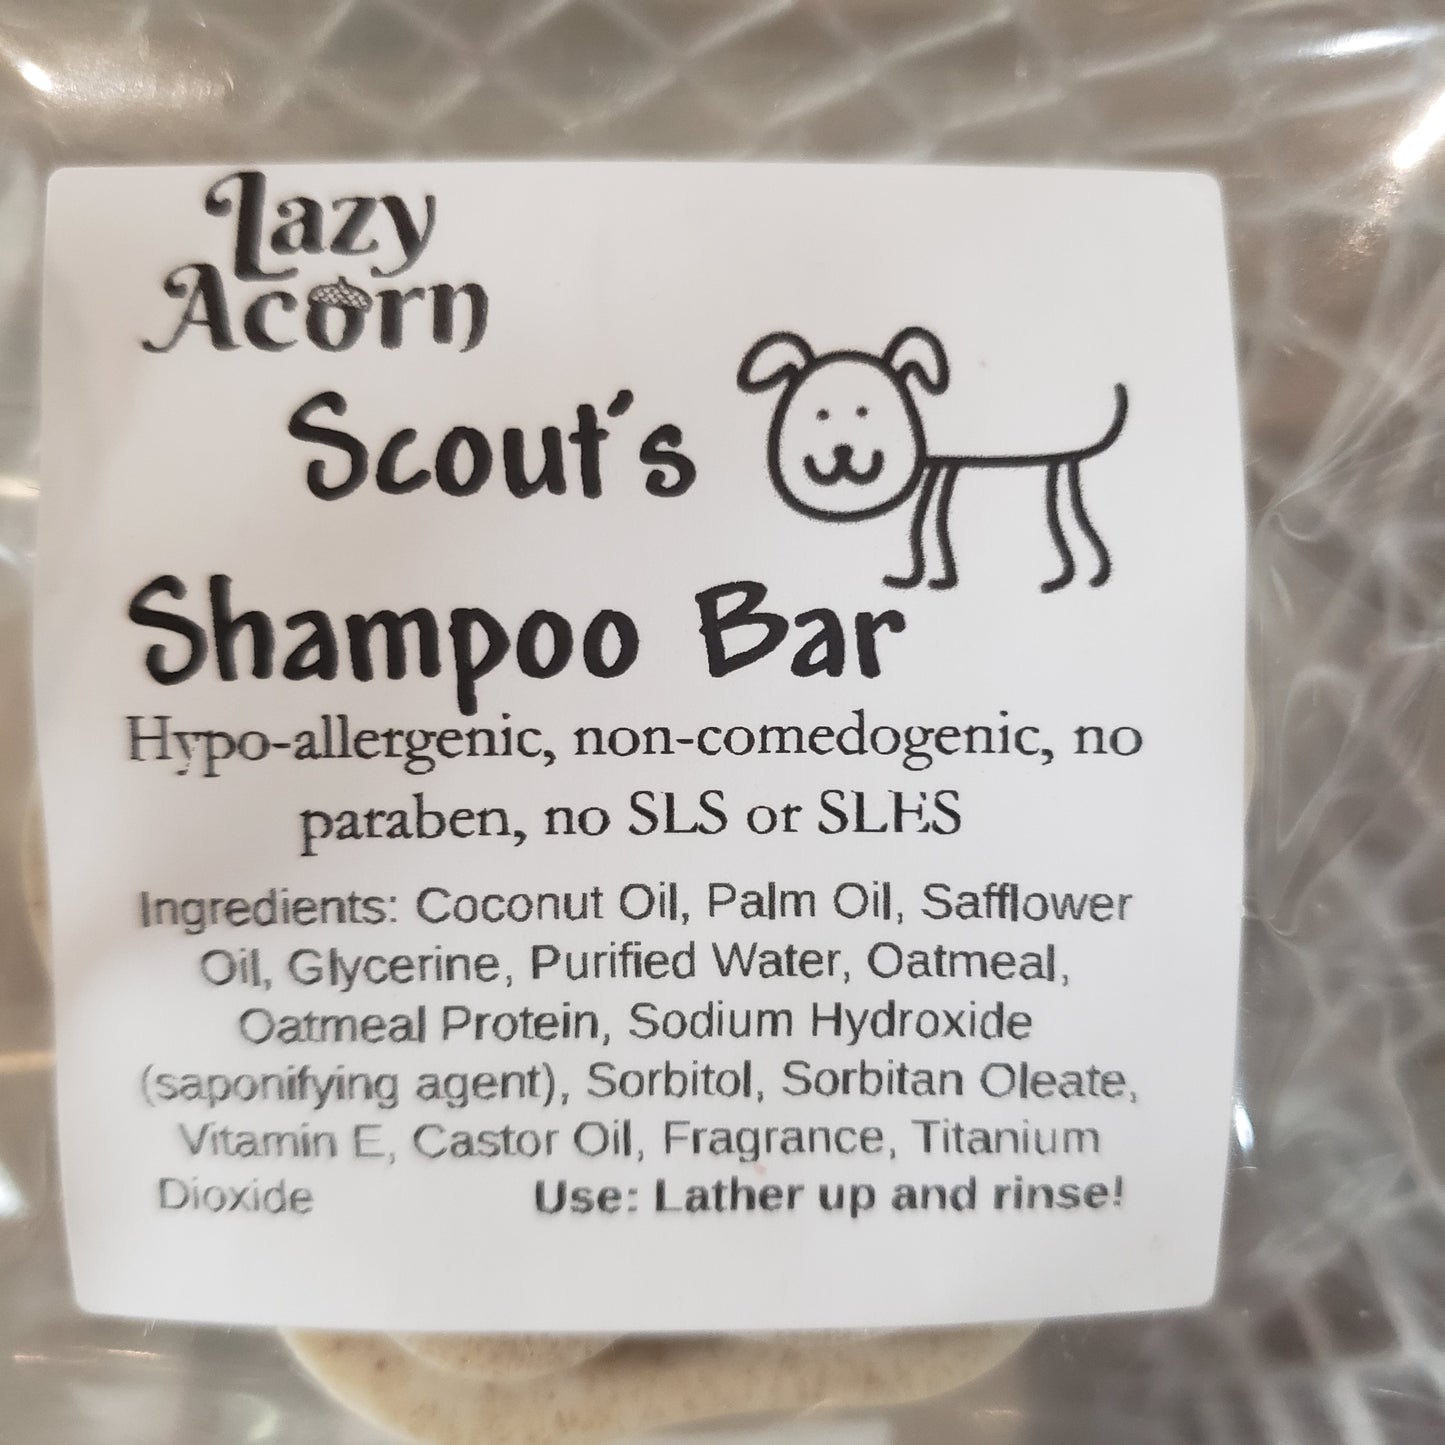 Scout's Shampoo Bar